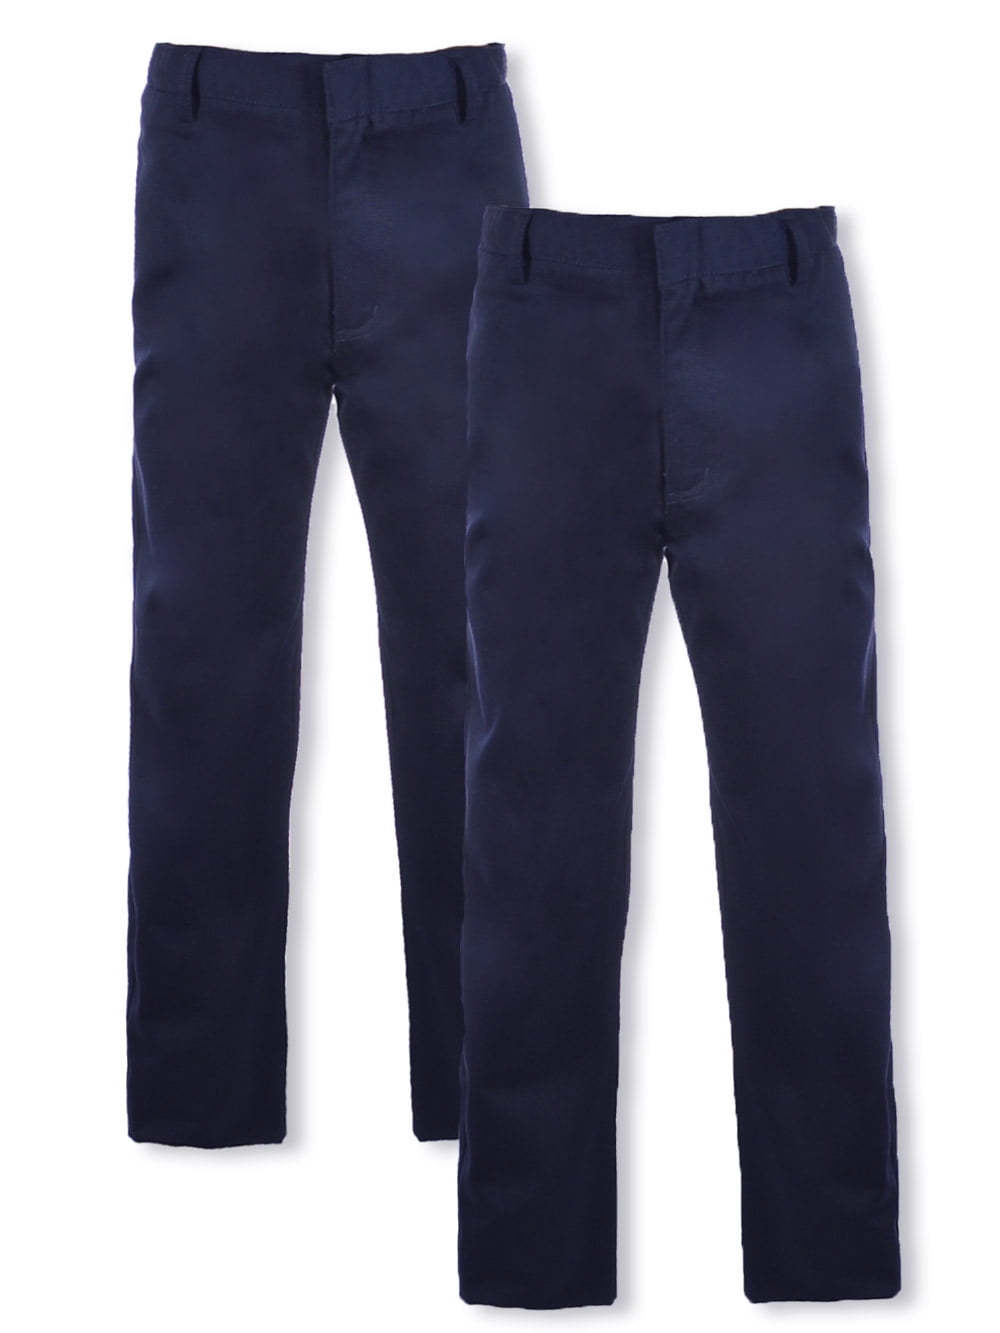 Cotton Gray Boys School Uniform Pants, Size: Medium, Waist Size: 24 at Rs  349/piece in Jalandhar